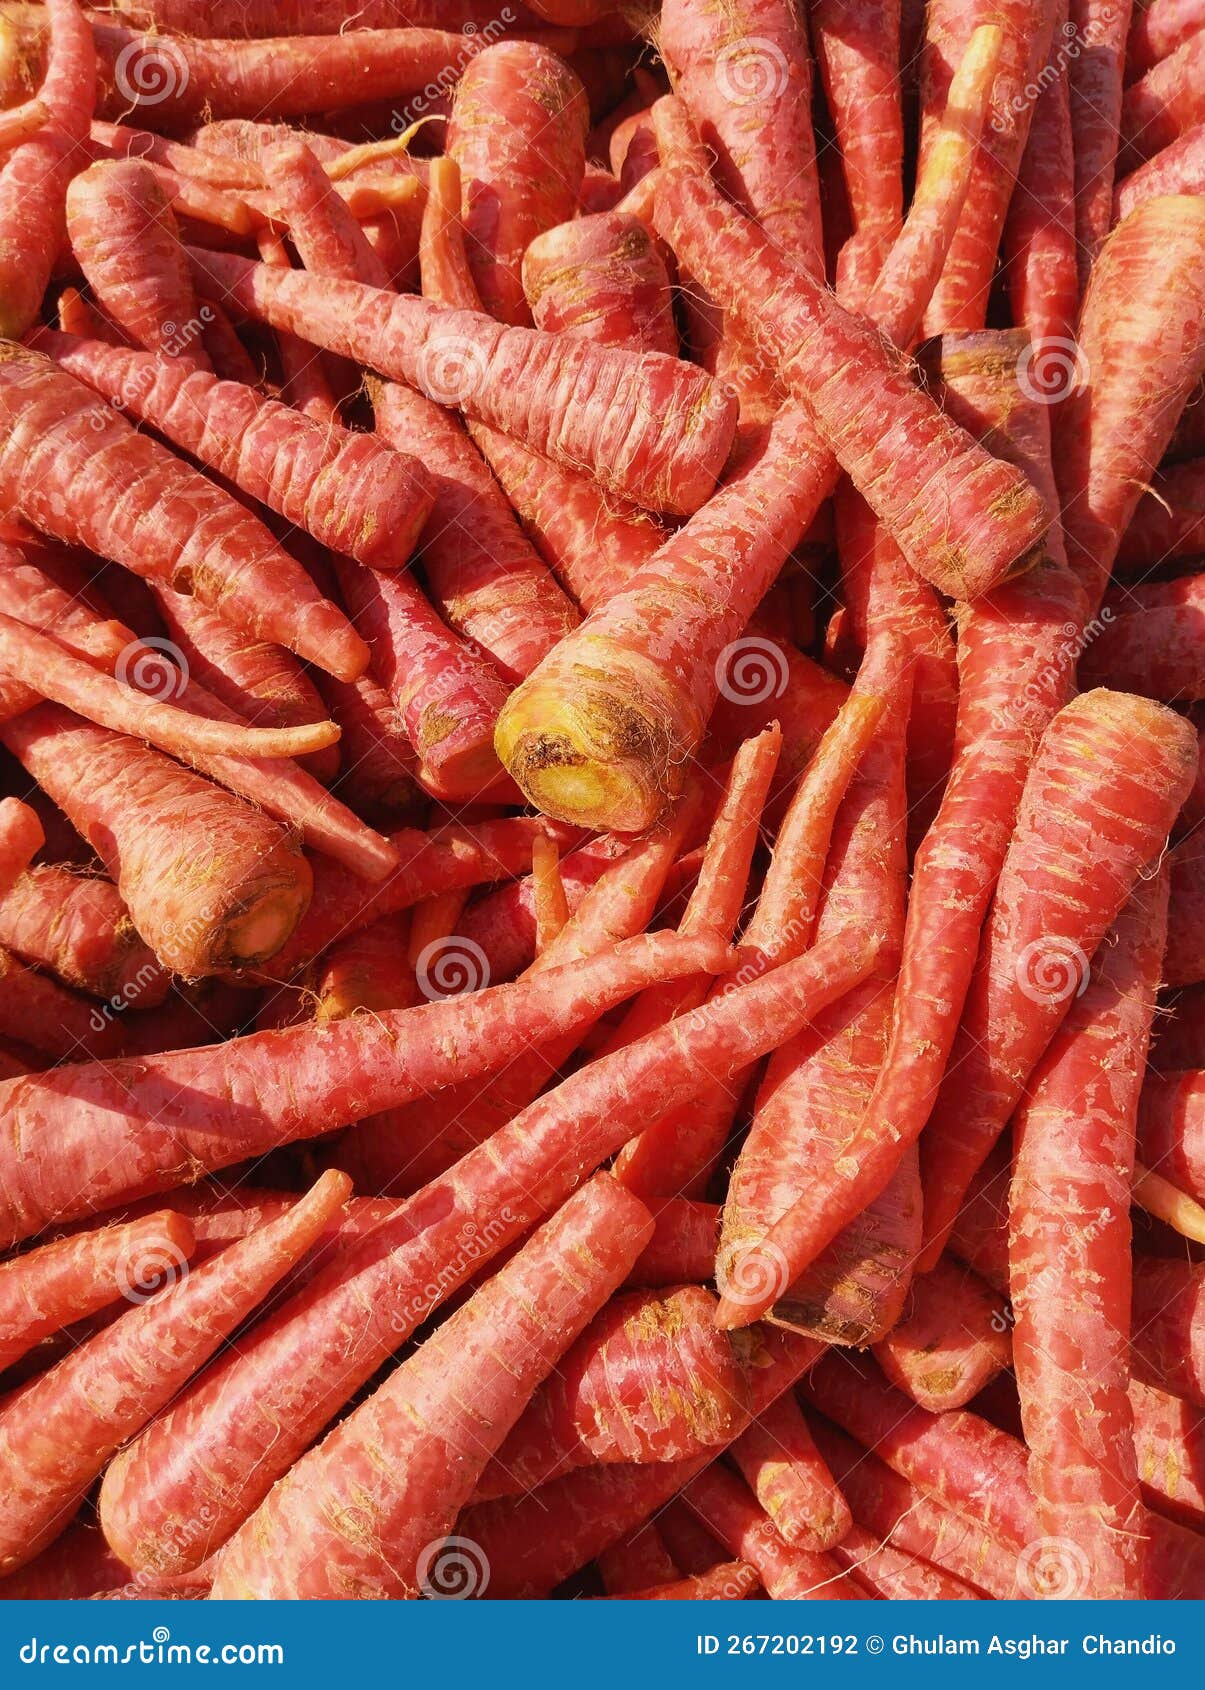 heap of carrot root vegetable food raw fresh red juicy organic carrots gajar carotte closeup zanahoriaimage cenoura stock photo